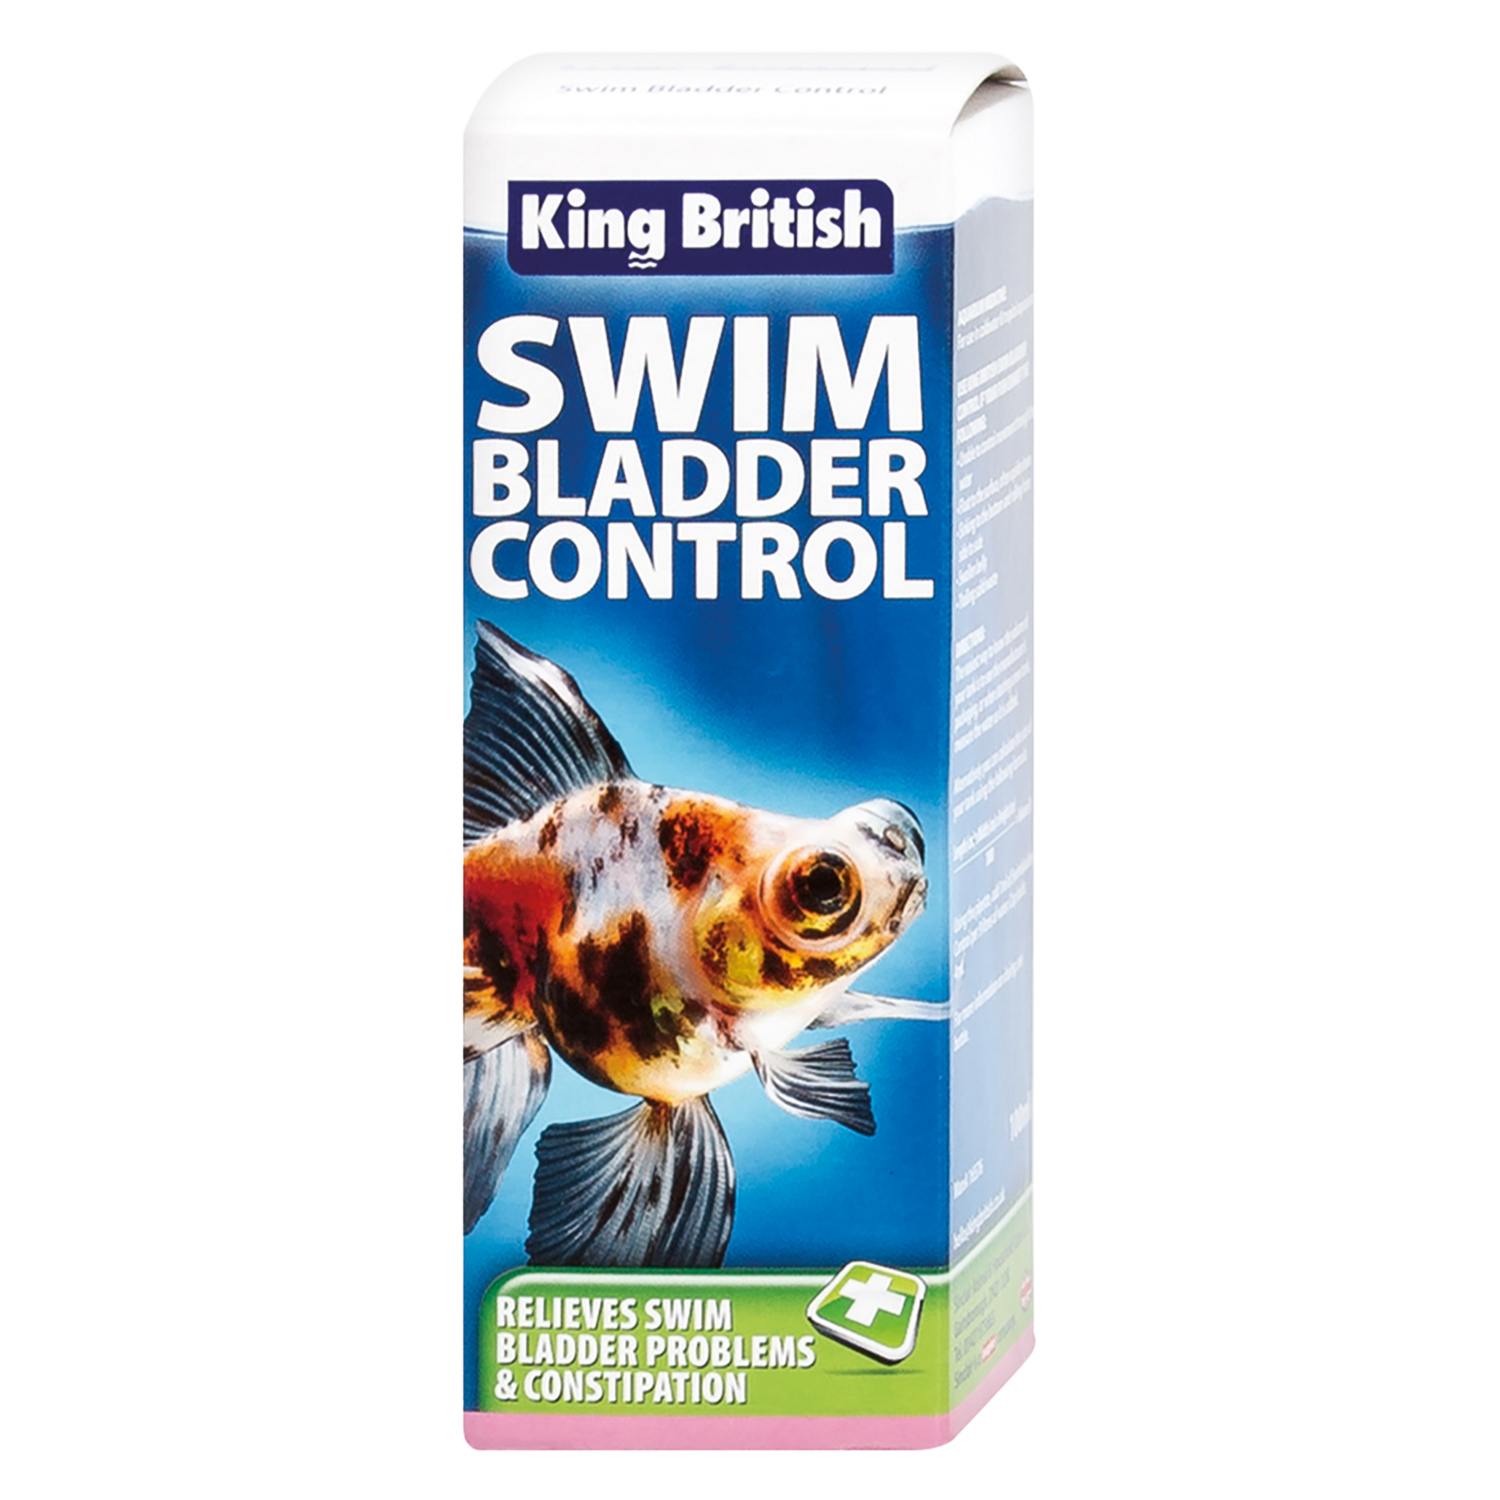 King British Swim Bladder Control Image